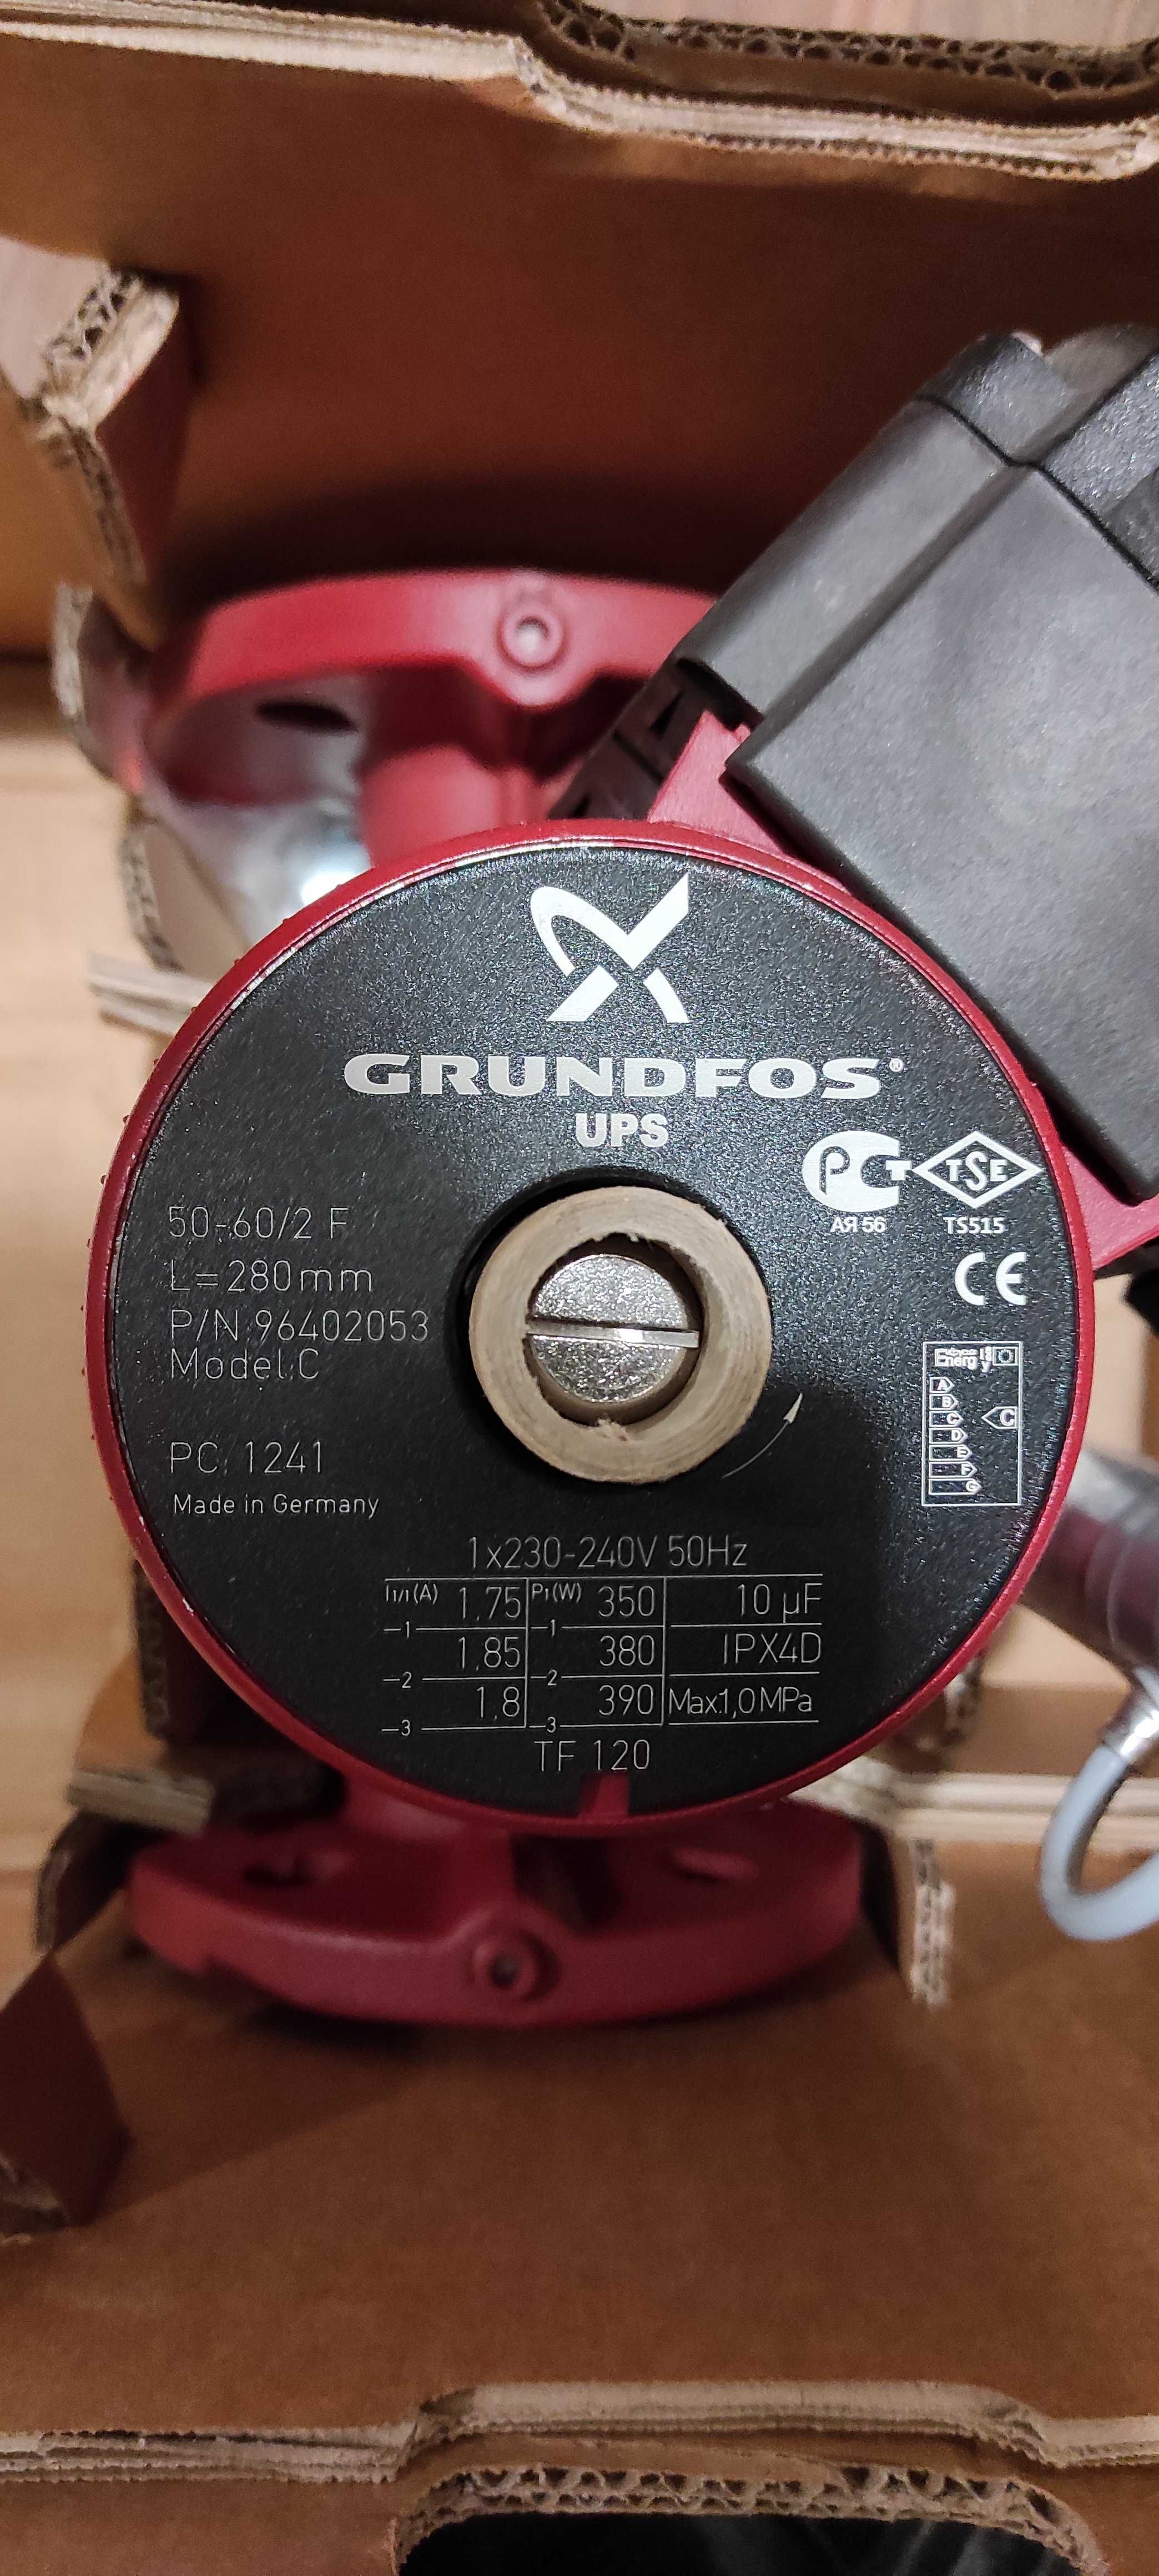 Pompa Grundfos Ups 50-60/2 f 280mm